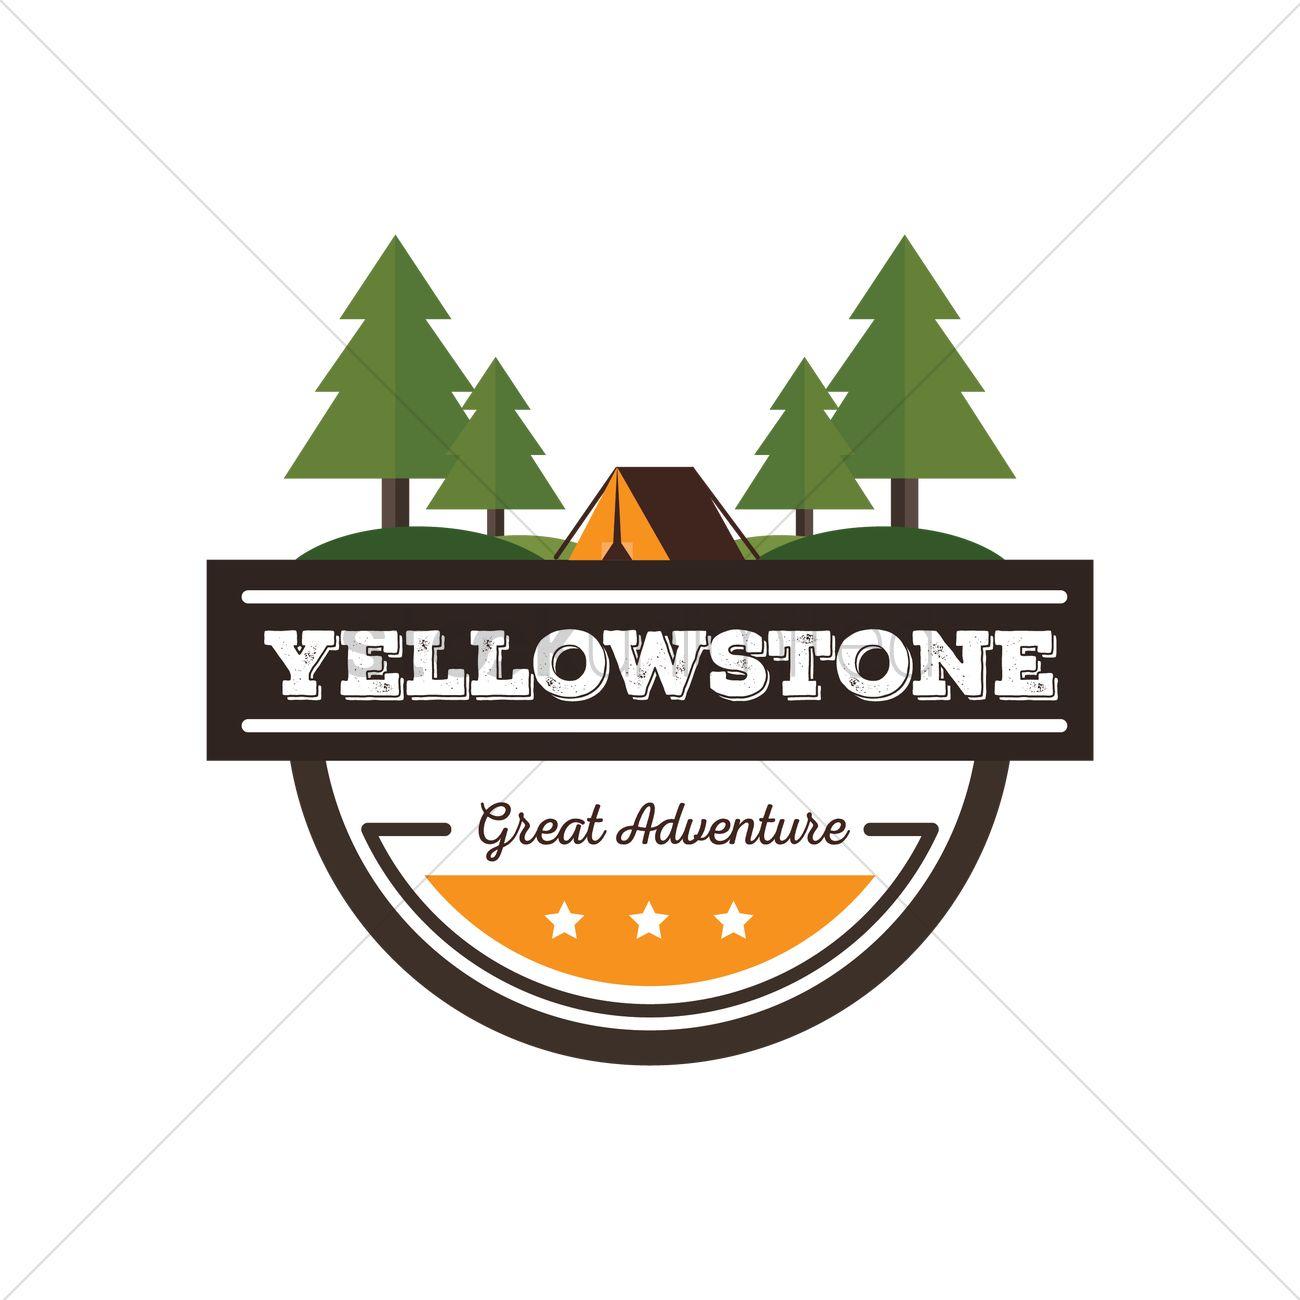 Yellowstone Logo - Free Yellowstone label Vector Image